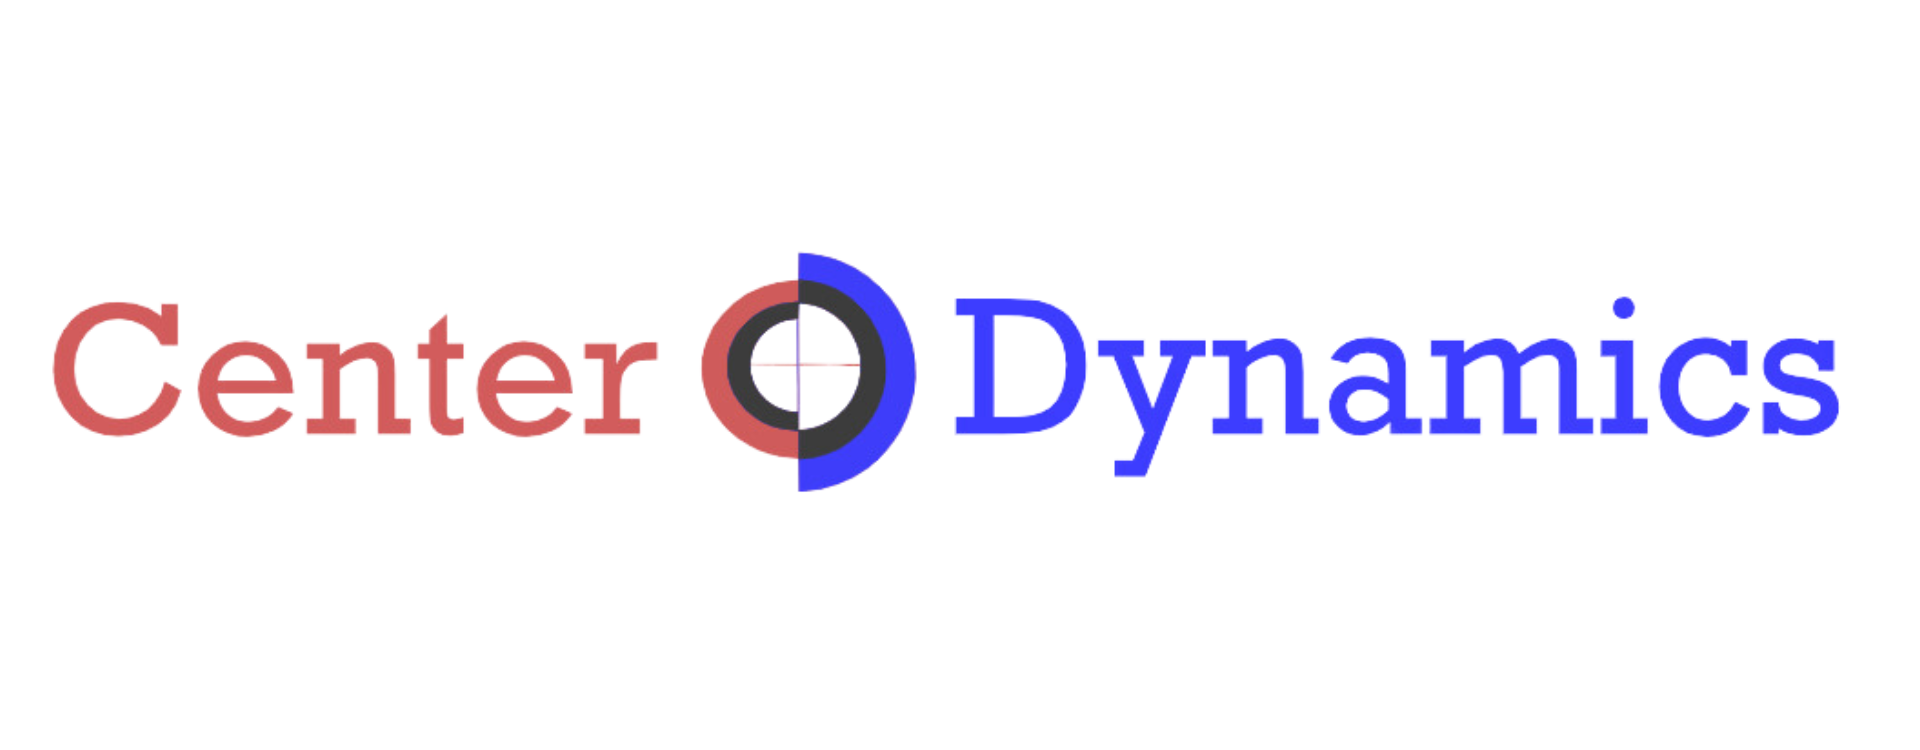 Center Dynamics logo (1)